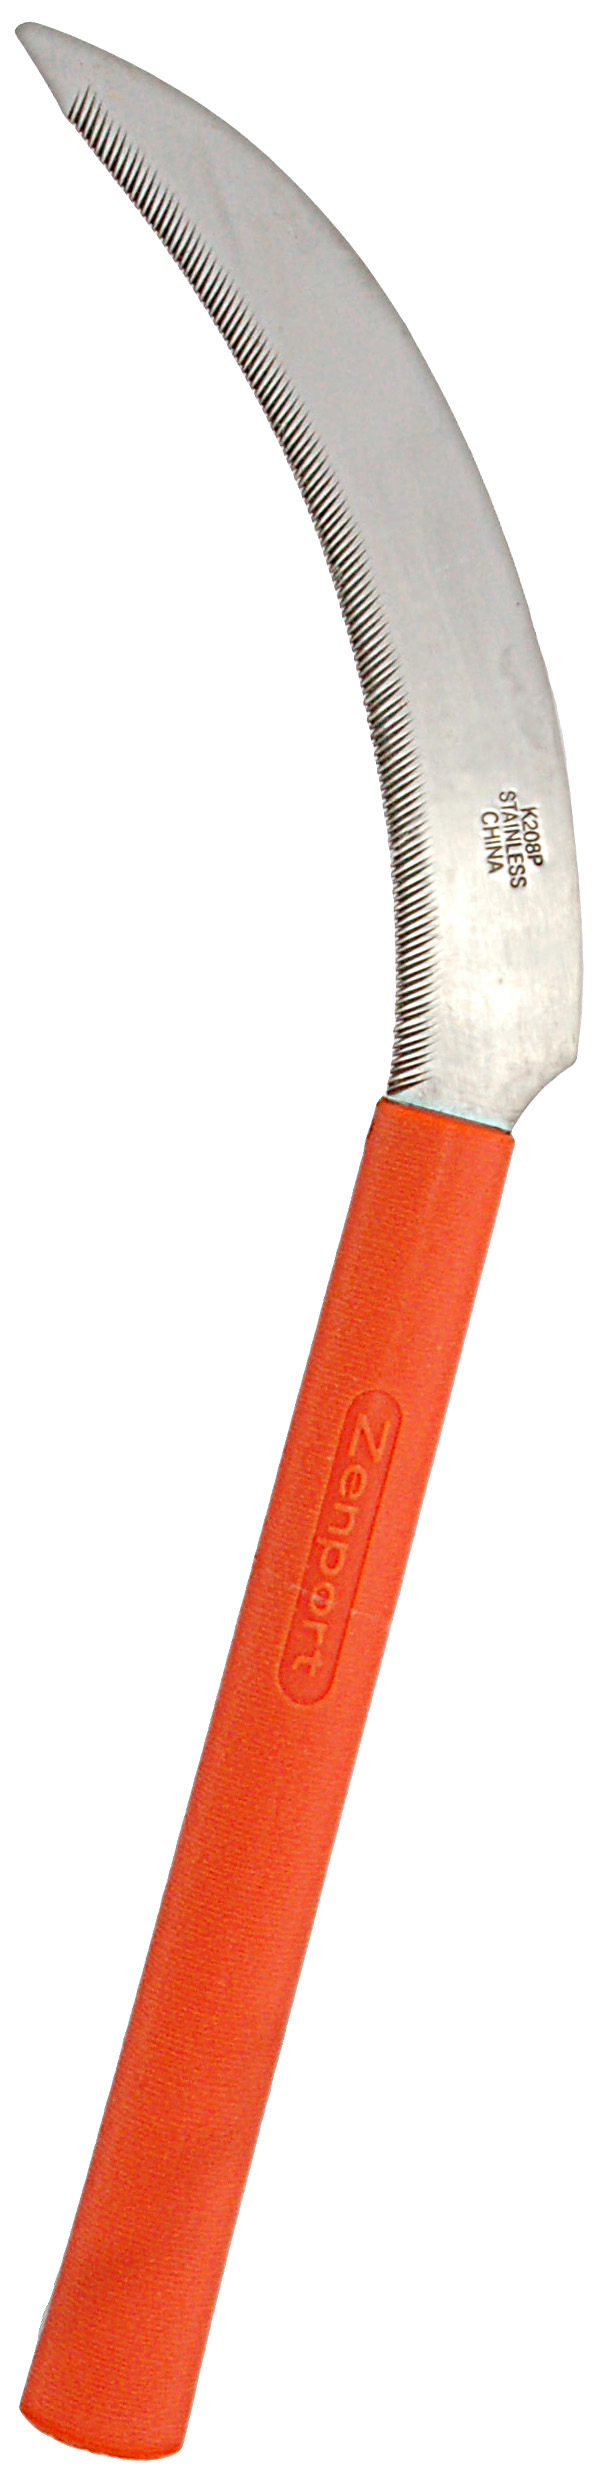 Zenport Sickle K208P Harvest Sickle, Orange Plastic Handle, Light Serration, 6.5-Inch Stainless Steel Blade